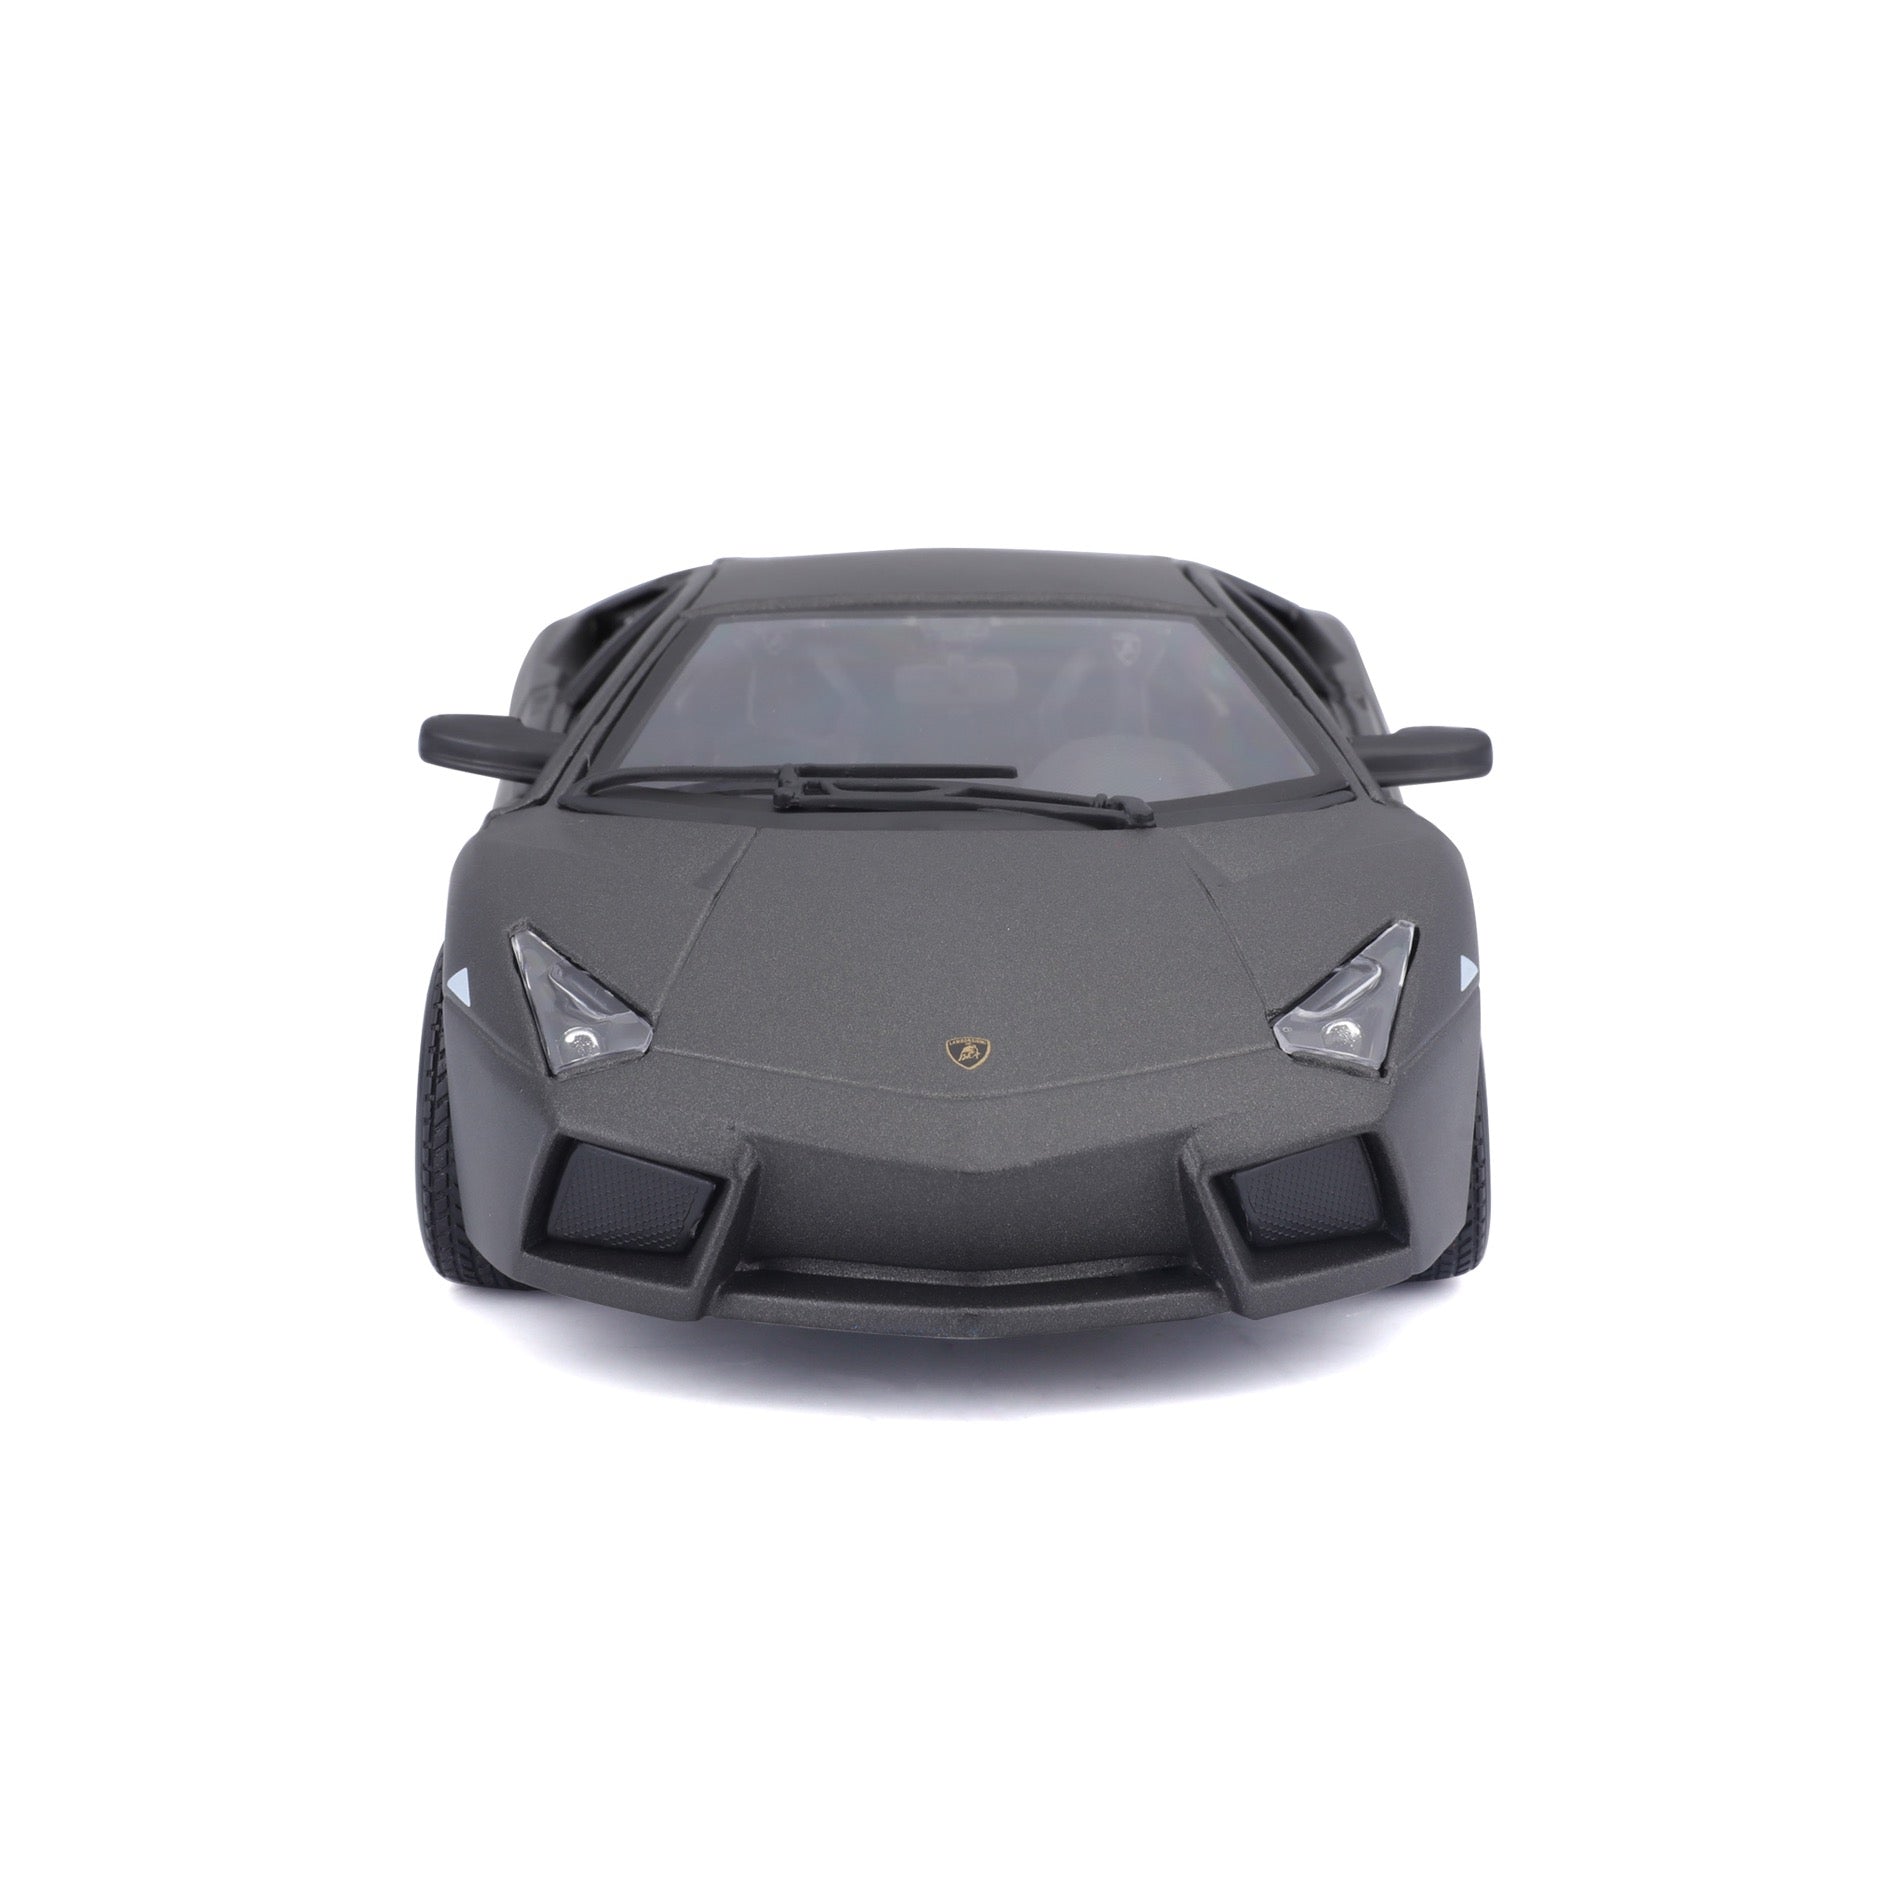 18-21041 GY - Bburago - 1:24 - Lamborghini Reventon - Met Grey